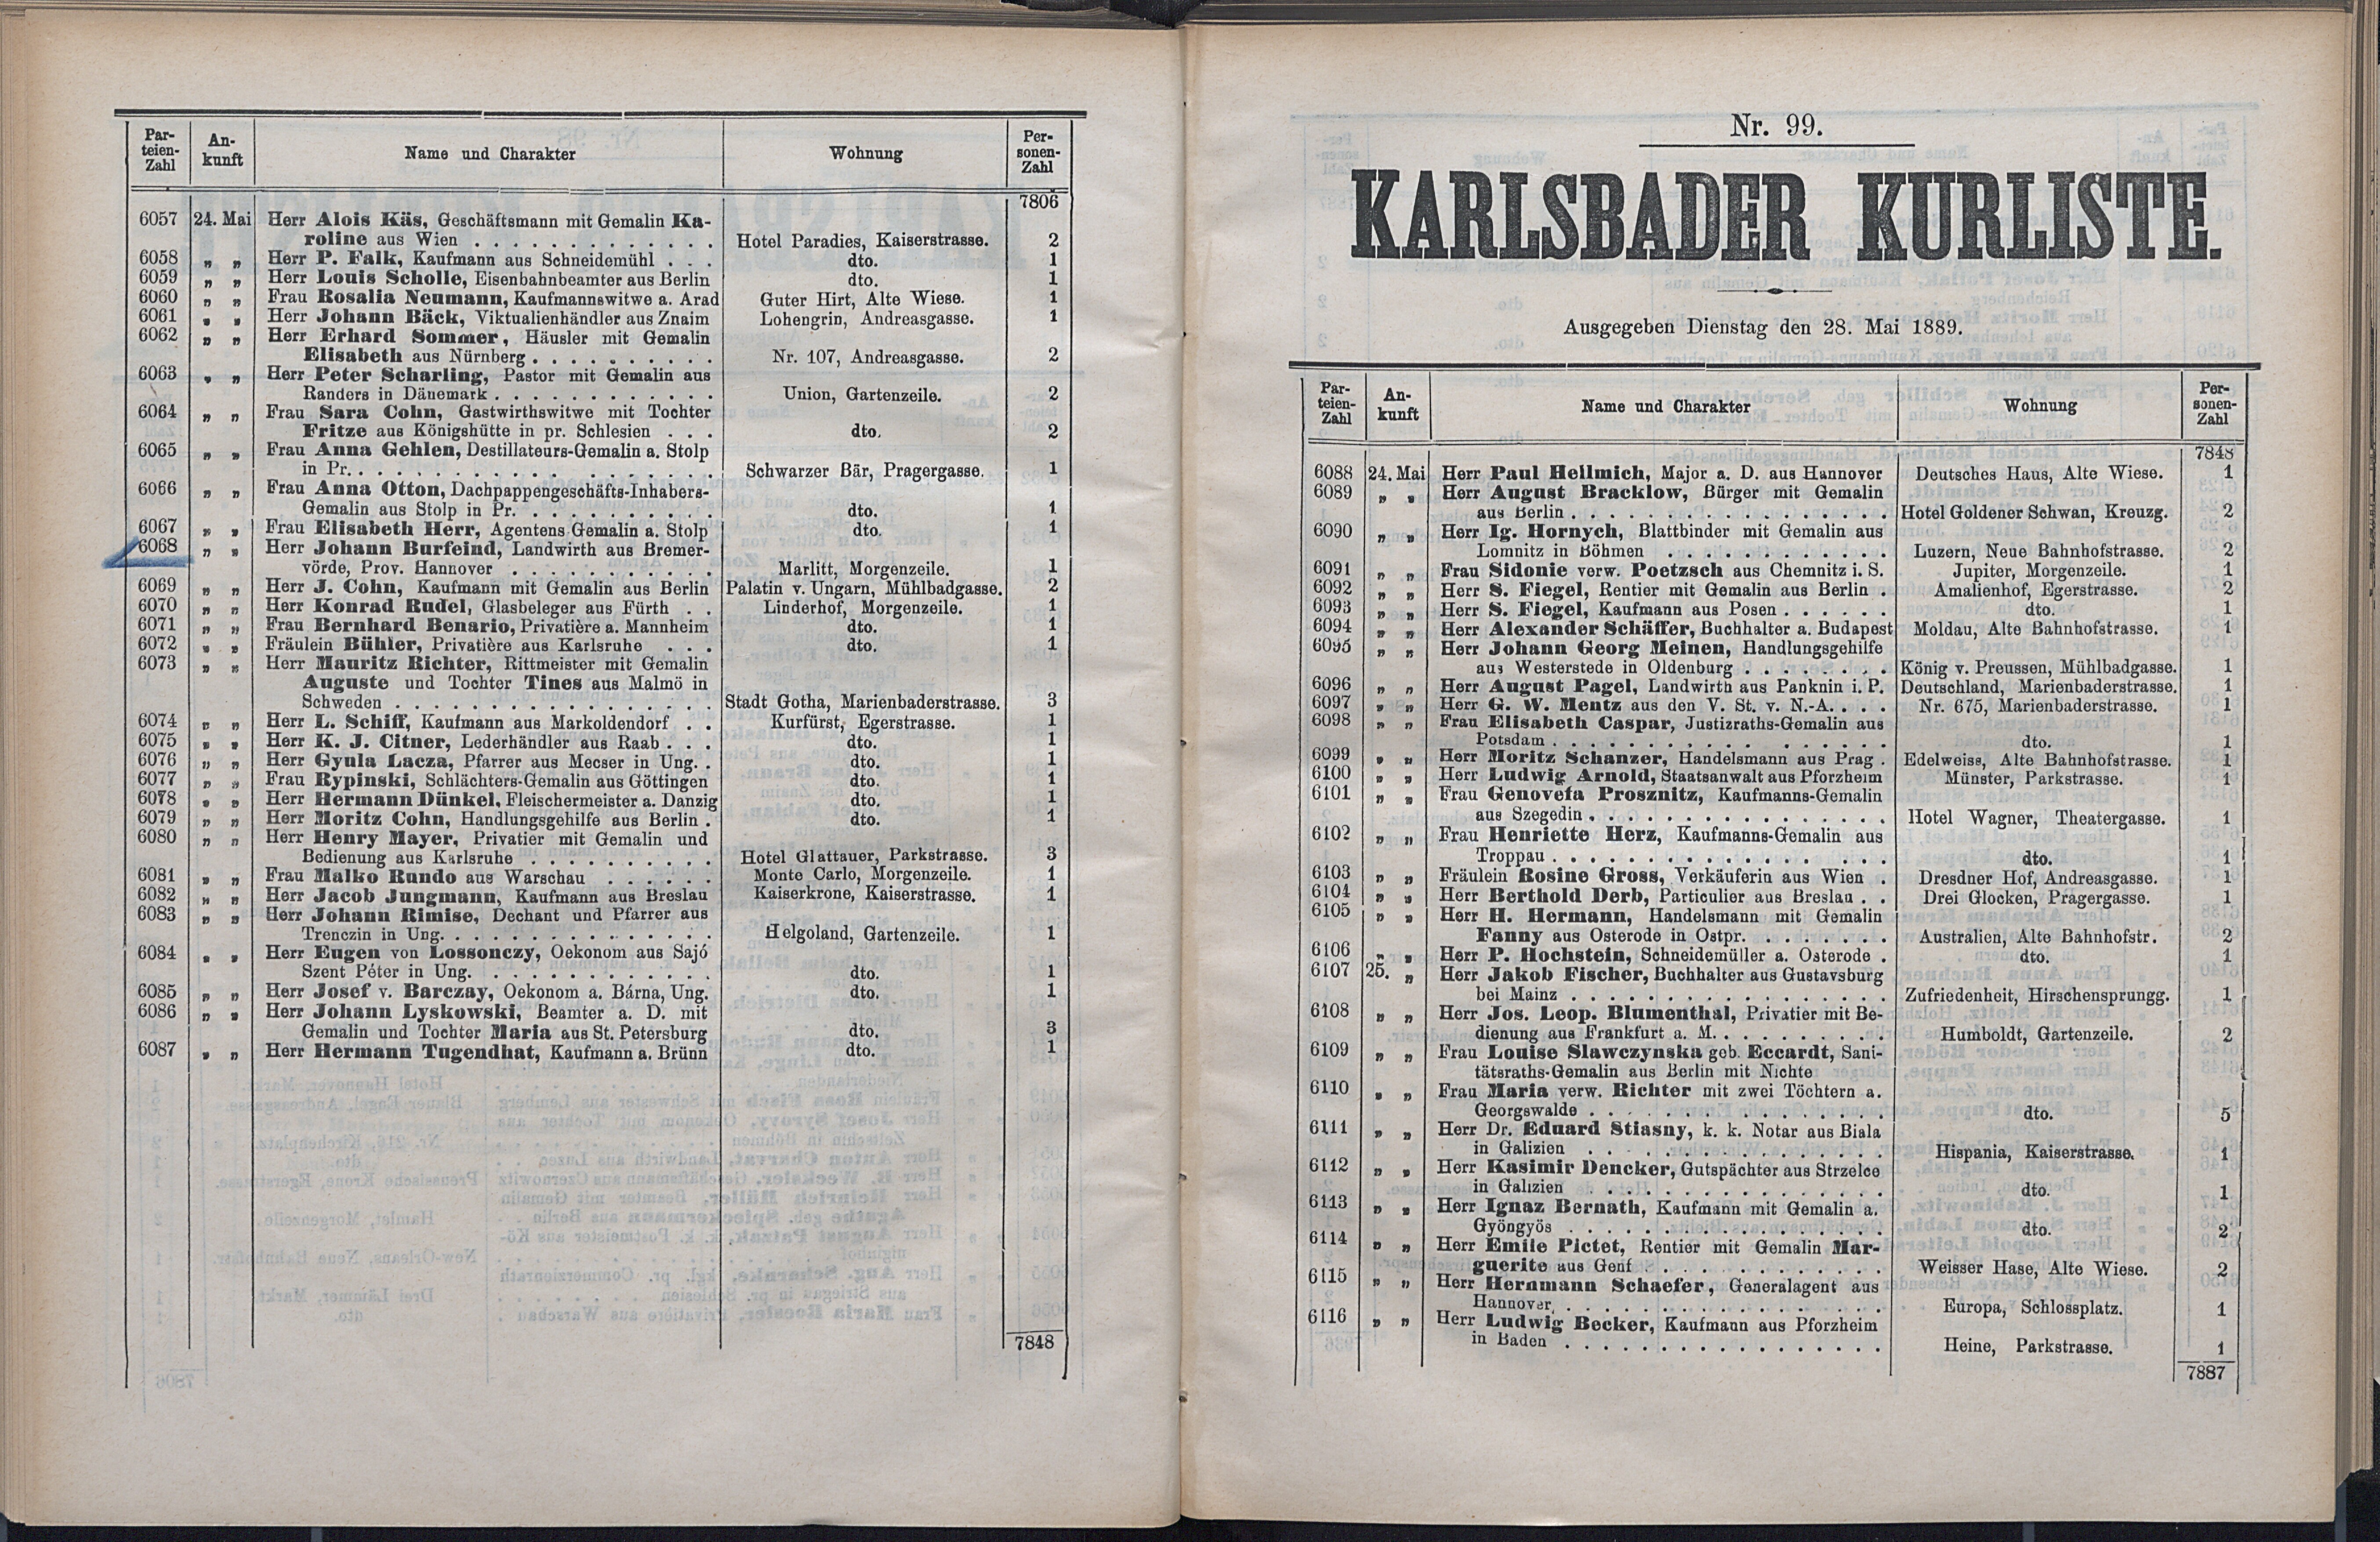 160. soap-kv_knihovna_karlsbader-kurliste-1889_1610